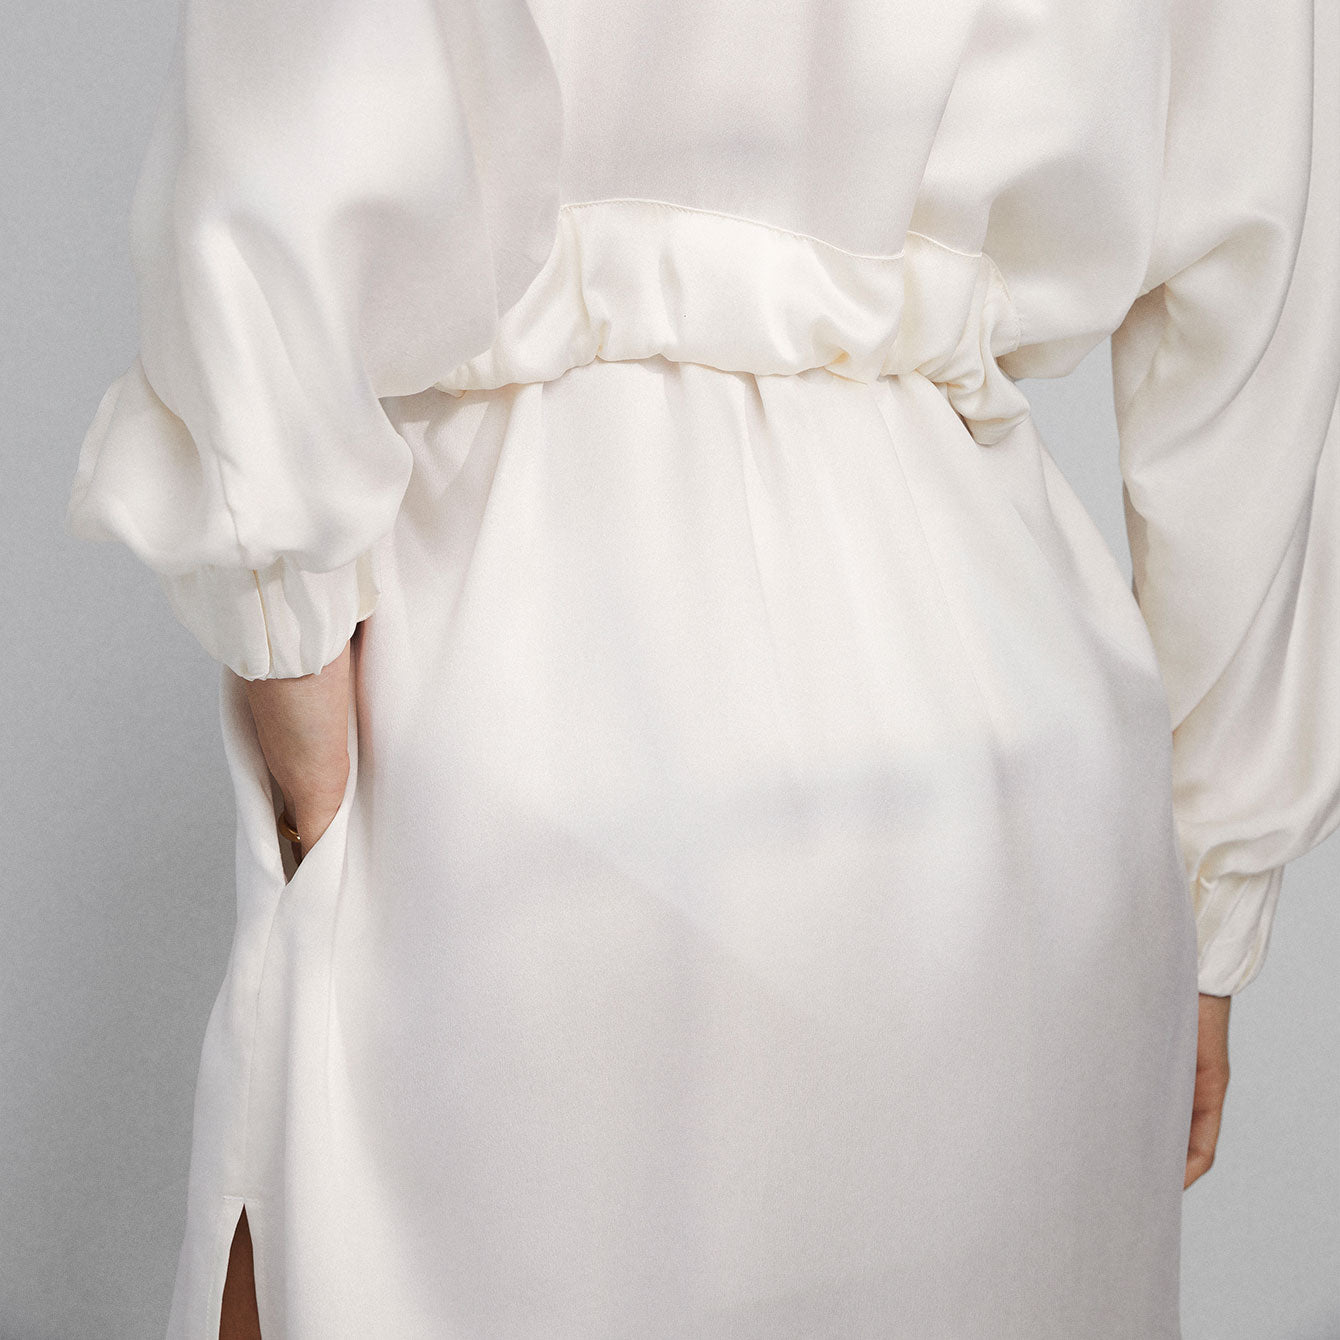 Lunya Sleepwear Washable Silk Robe - #Tranquil White